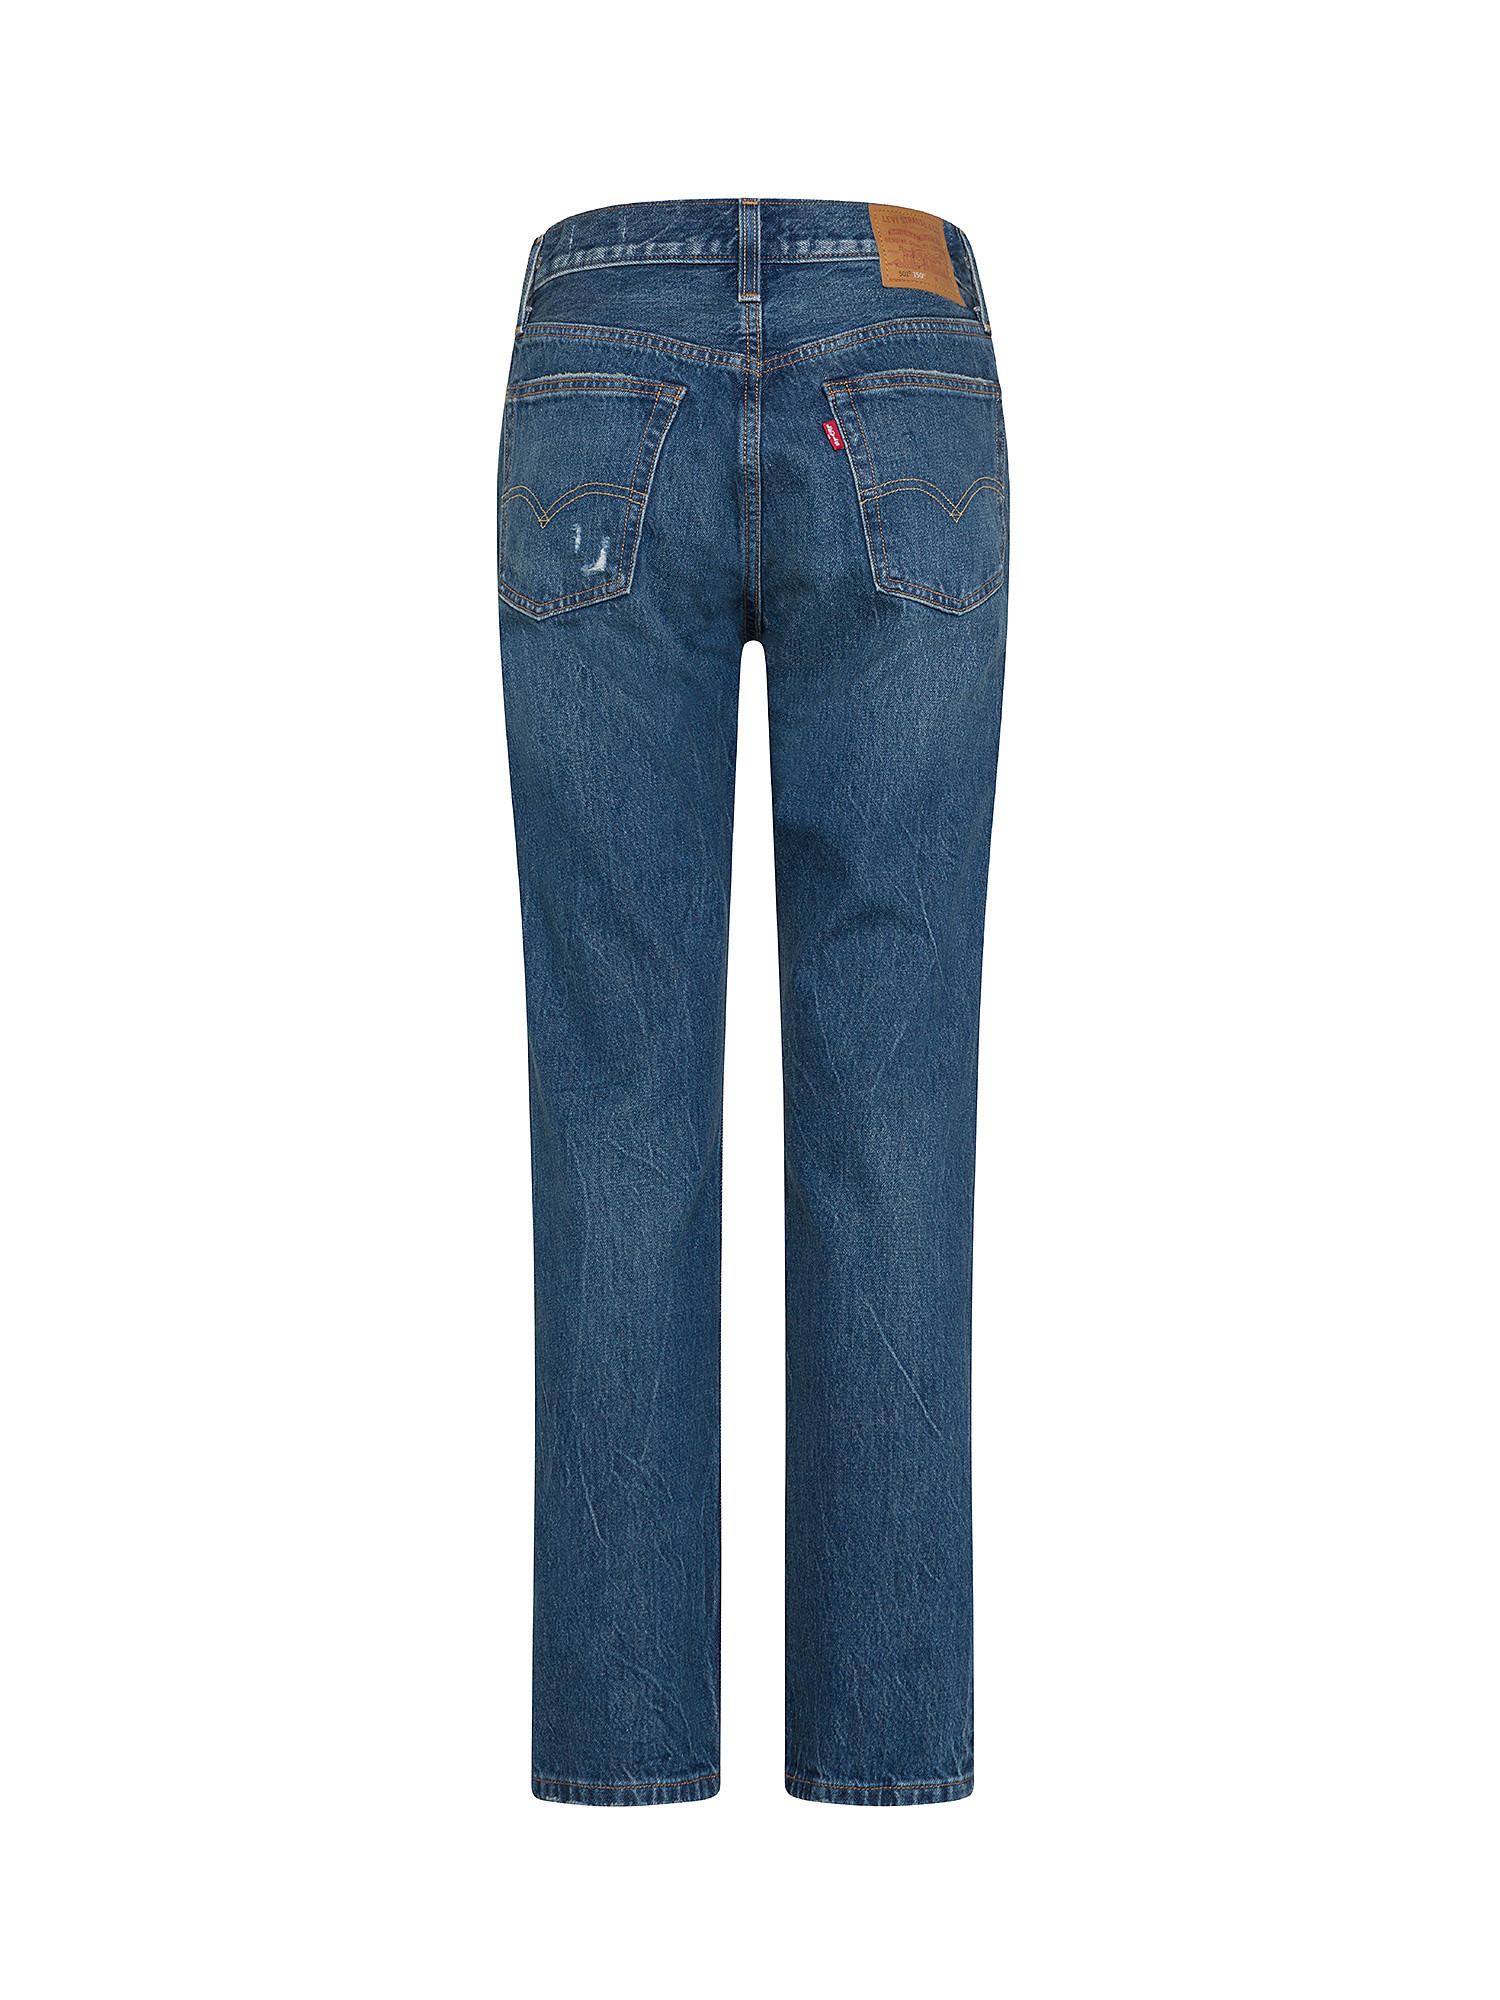 Levi's - 501® original jeans with selvedge, Denim, large image number 1